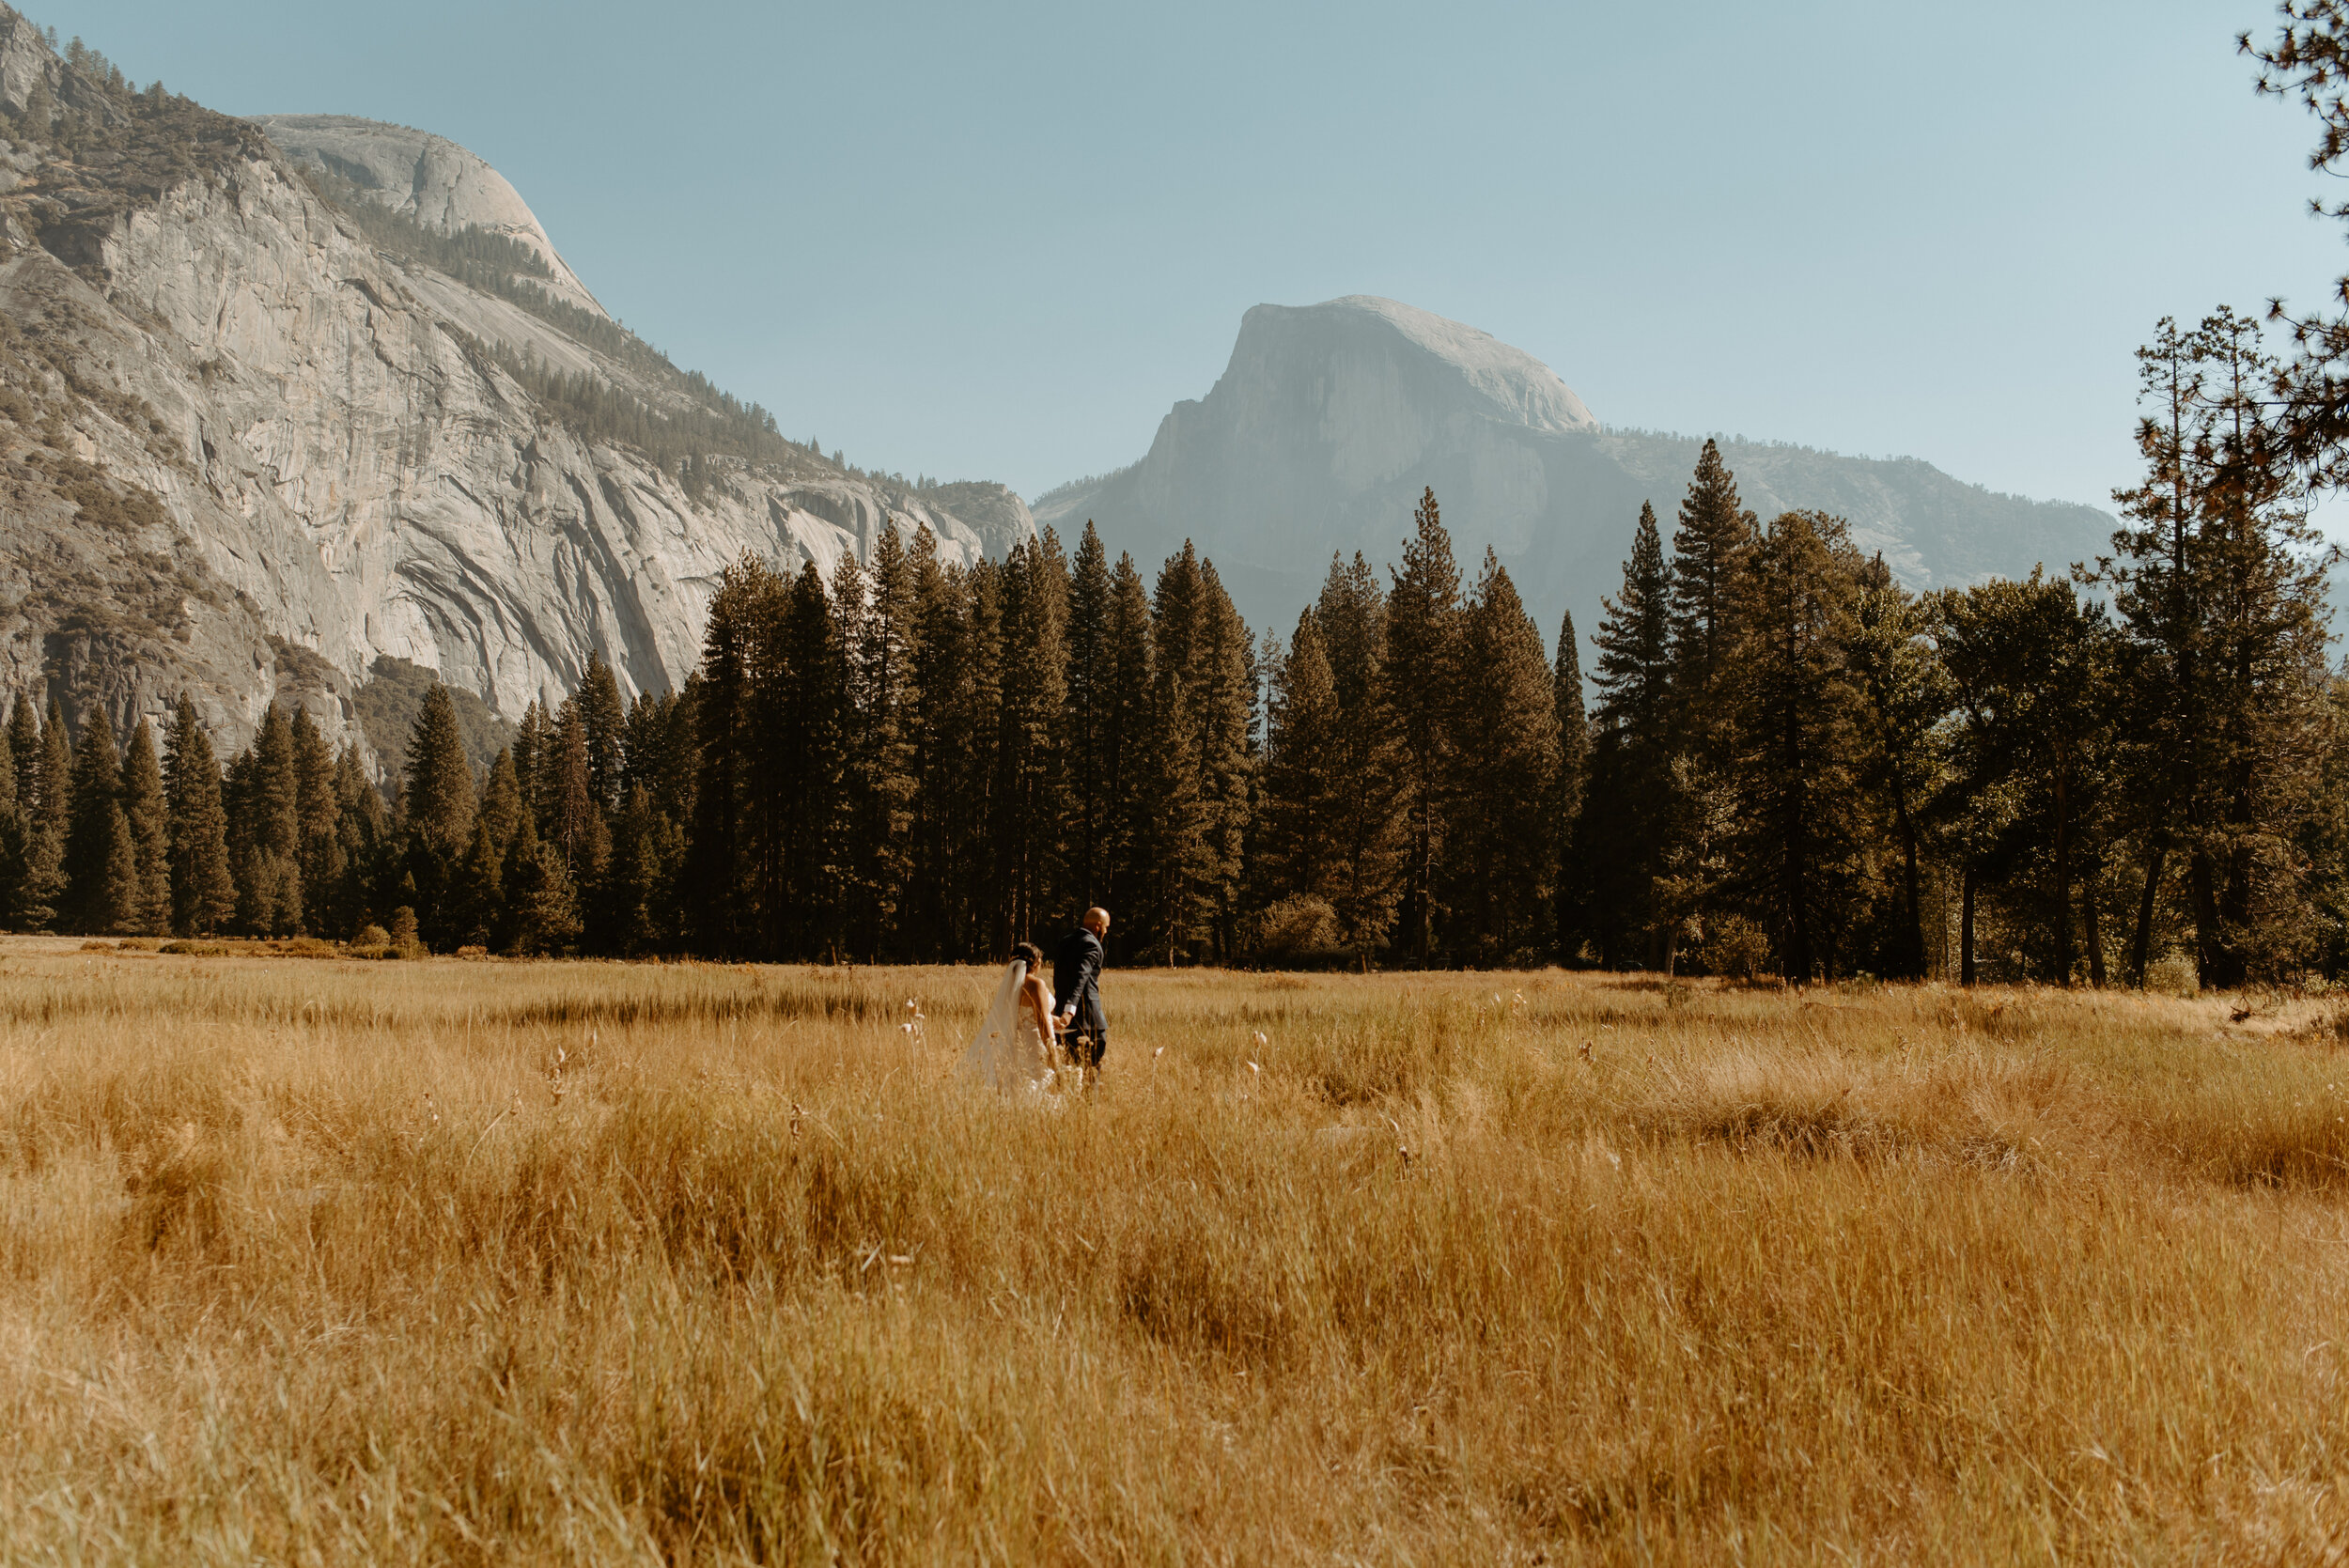 Glacier Point Elopement | Yosemite National Park Elopement and Wedding Photographer | Sunrise adventure elopement | California Elopement Photographer | Yosemite Meadows